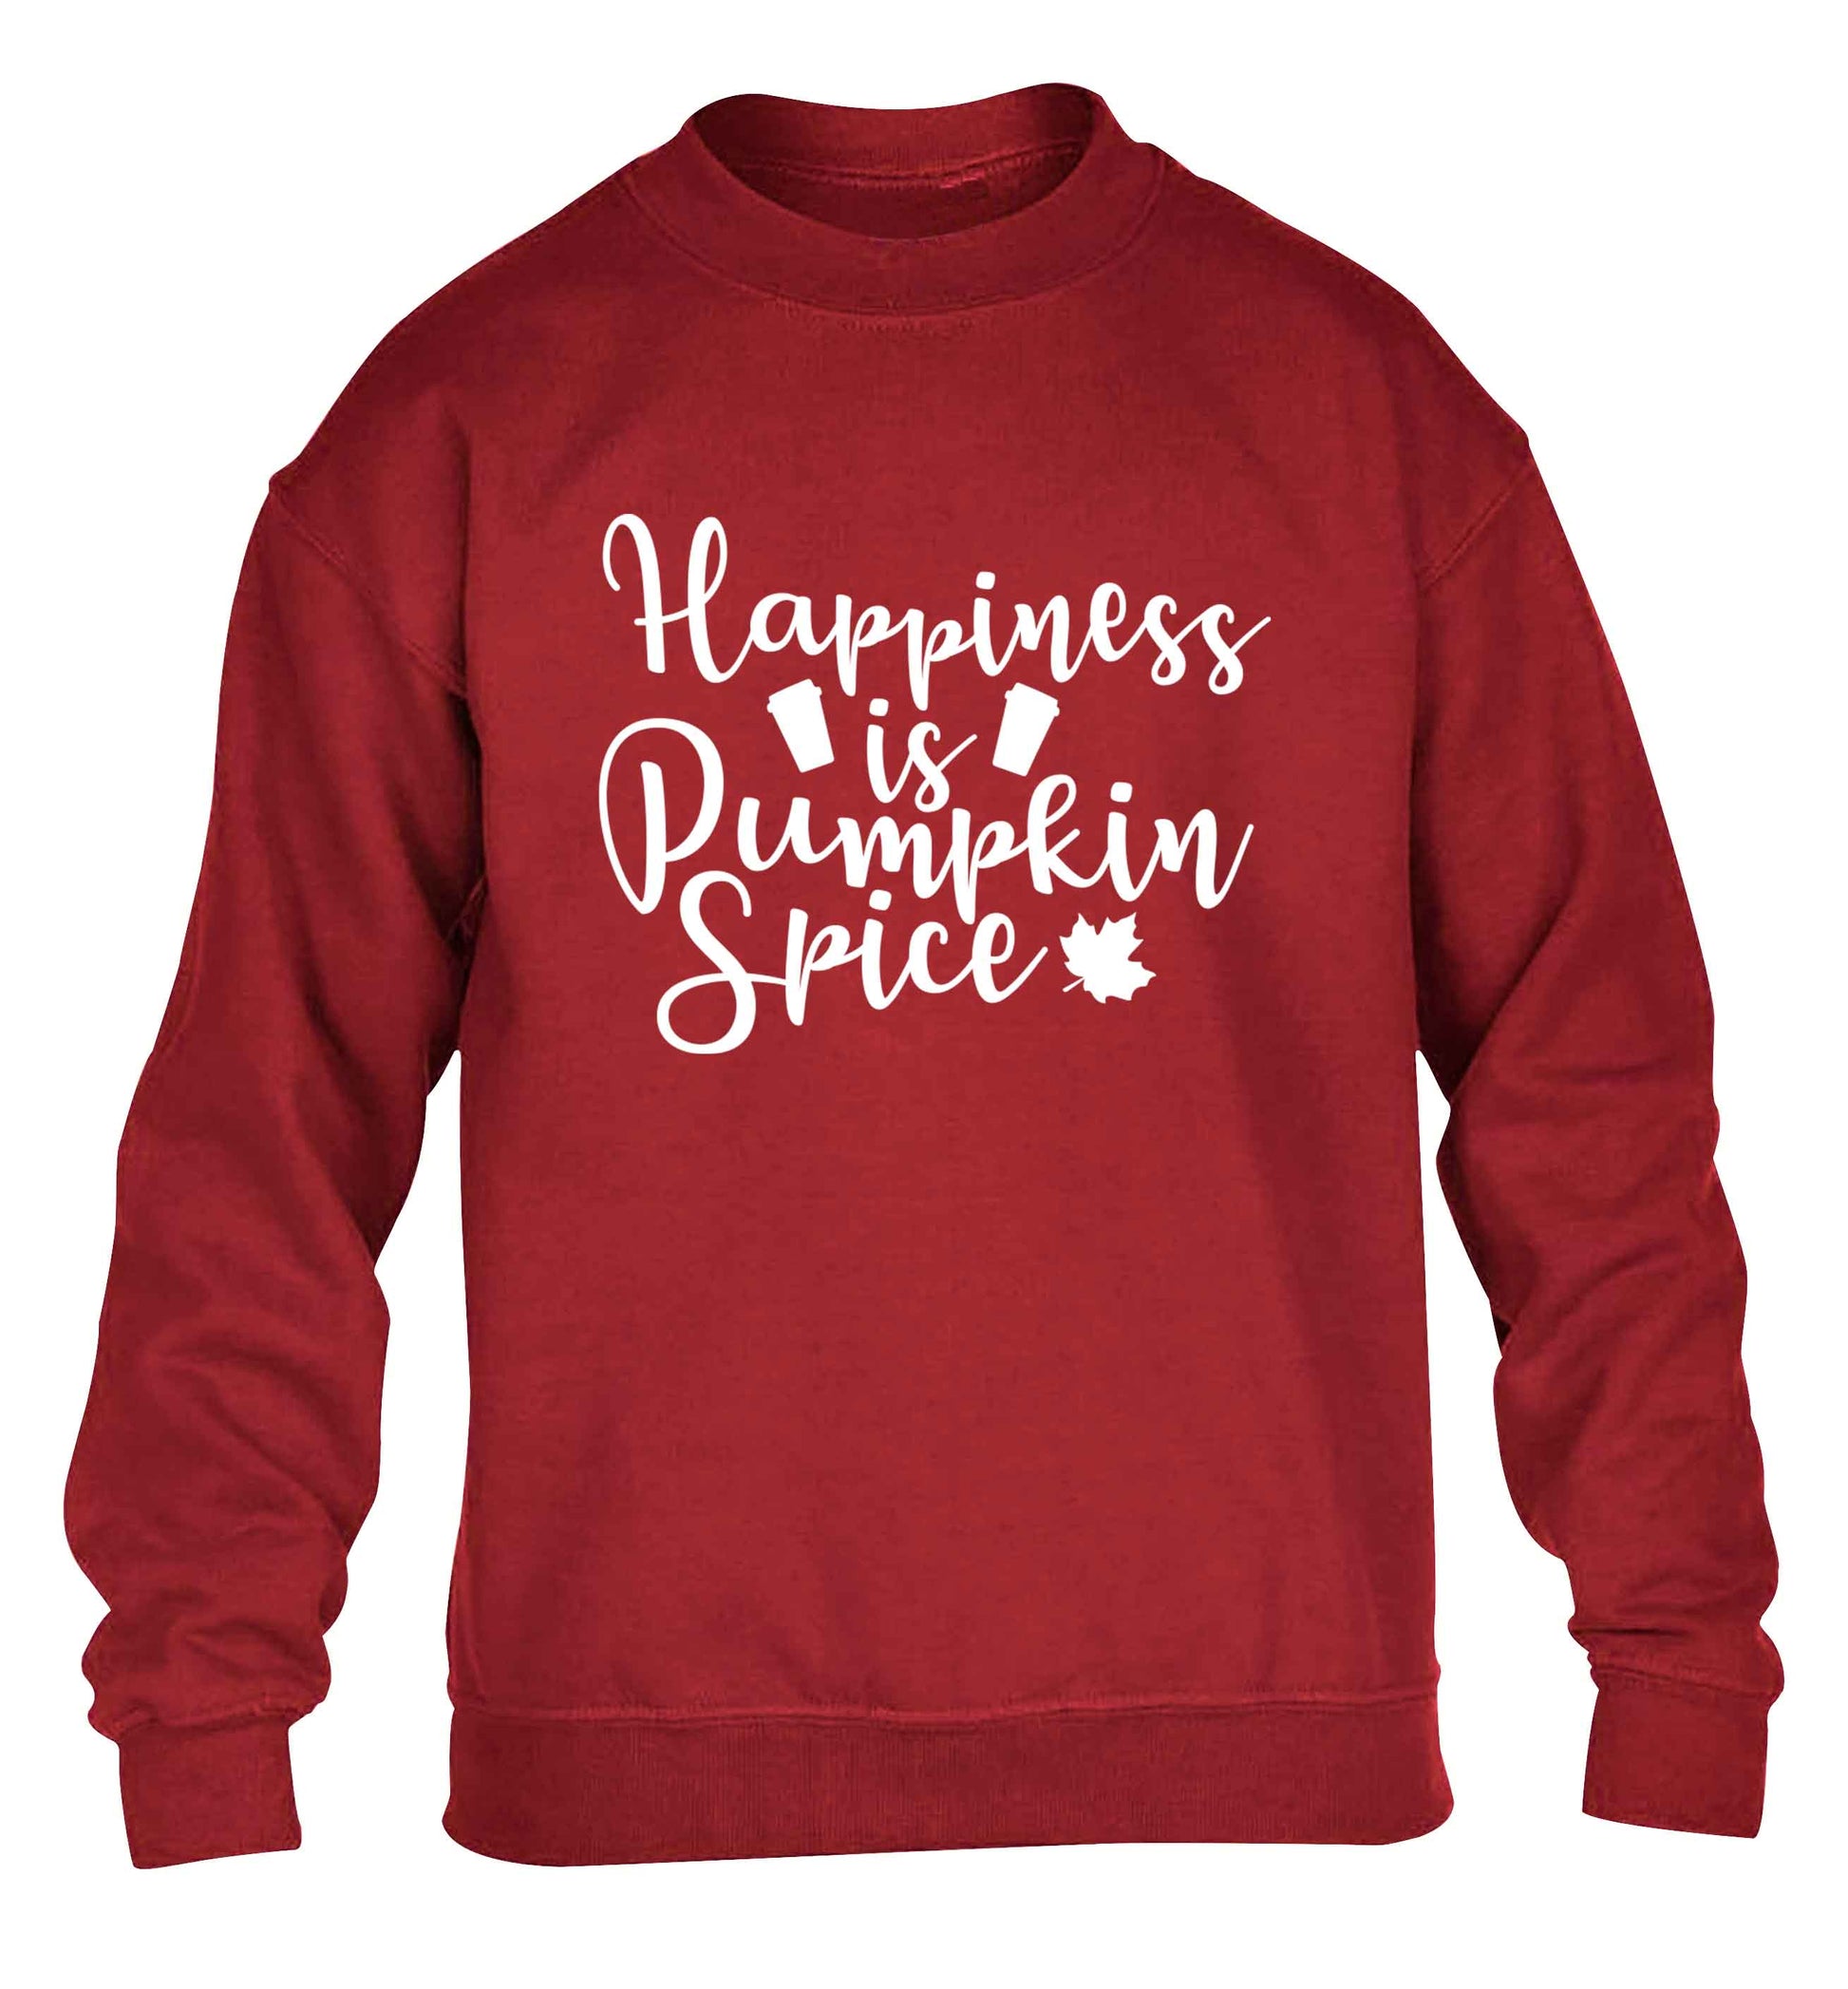 Happiness Pumpkin Spice children's grey sweater 12-13 Years